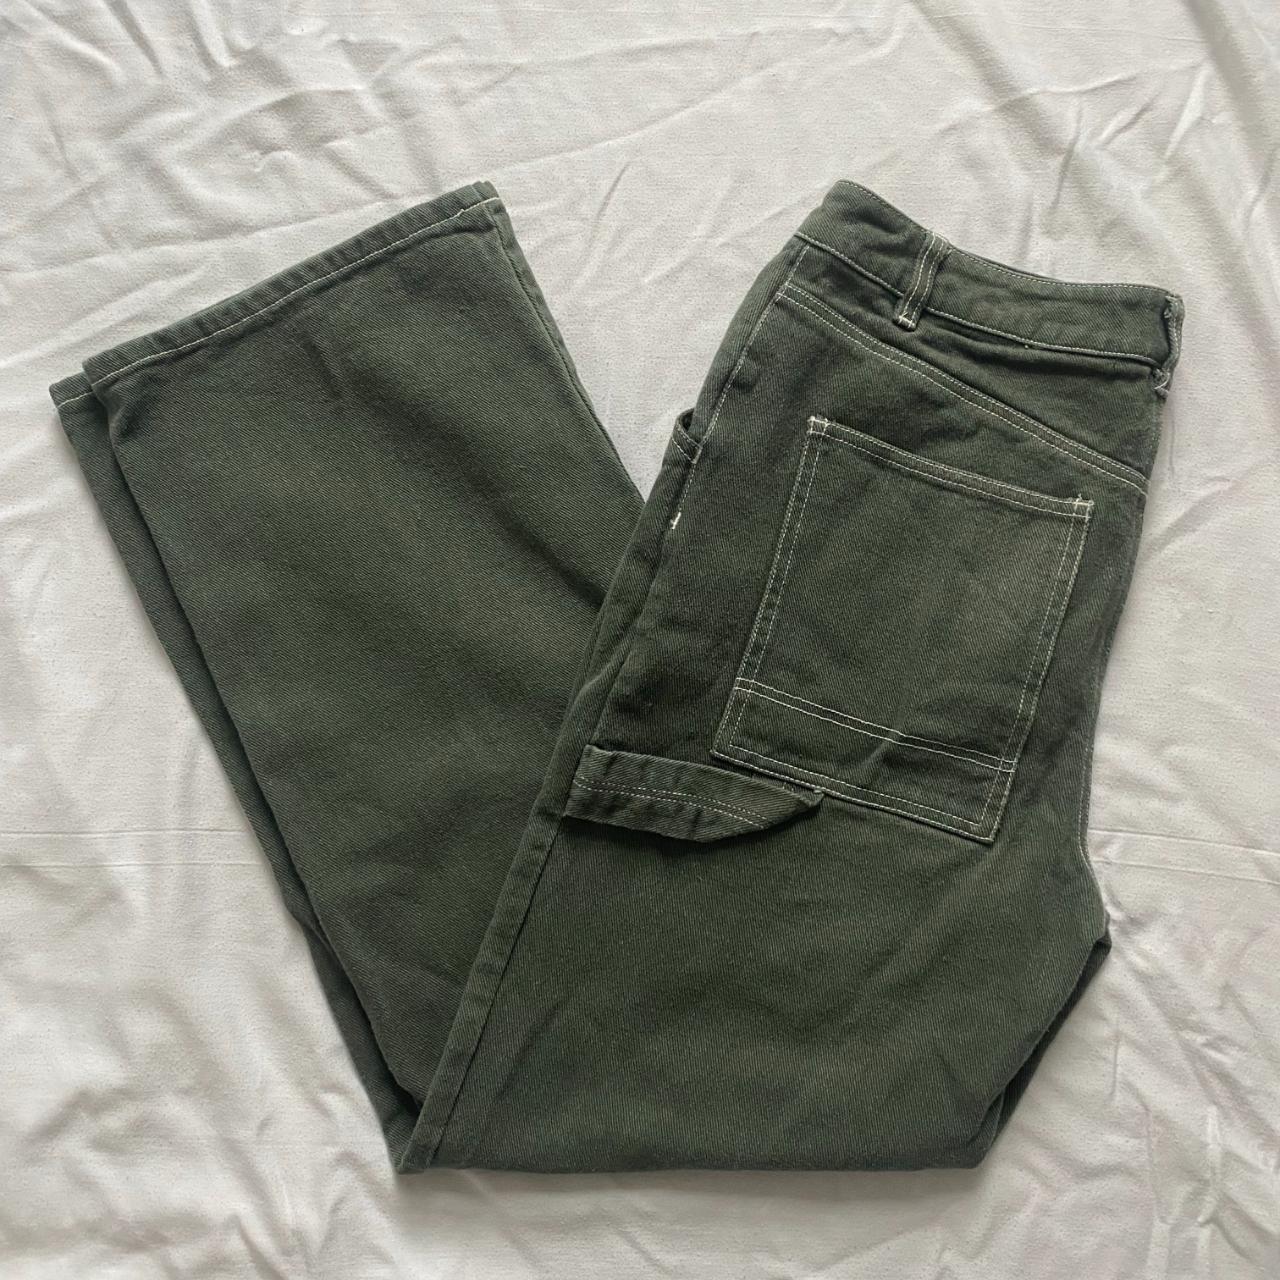 Cotton On cargo pants in dark green